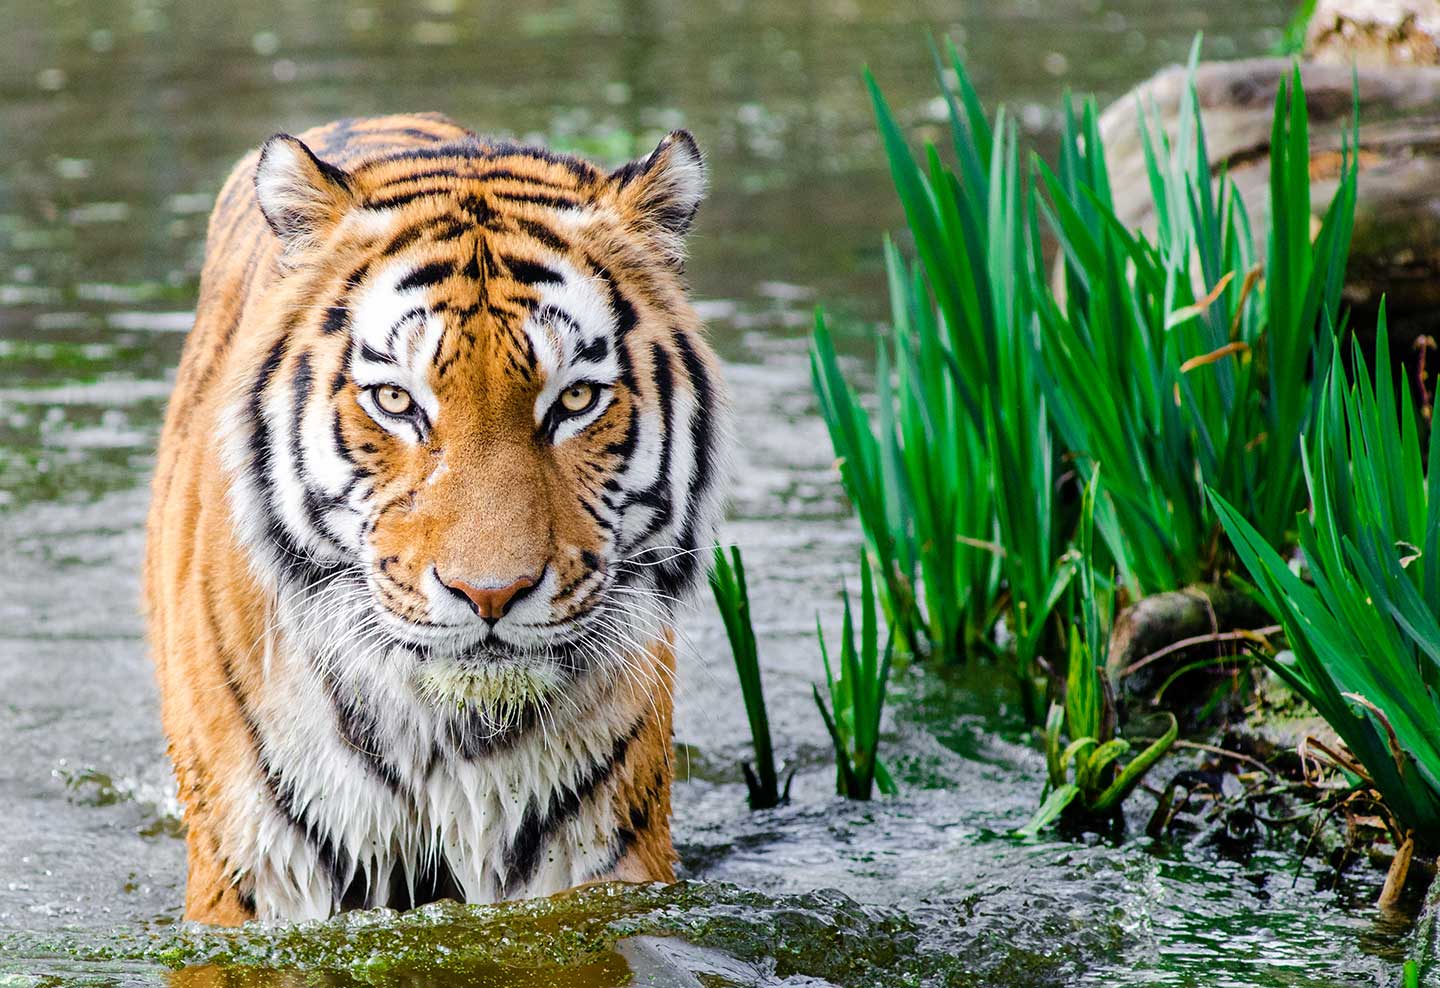 Bengal Tiger: The Power, Beauty and More! - Taman Safari Bali